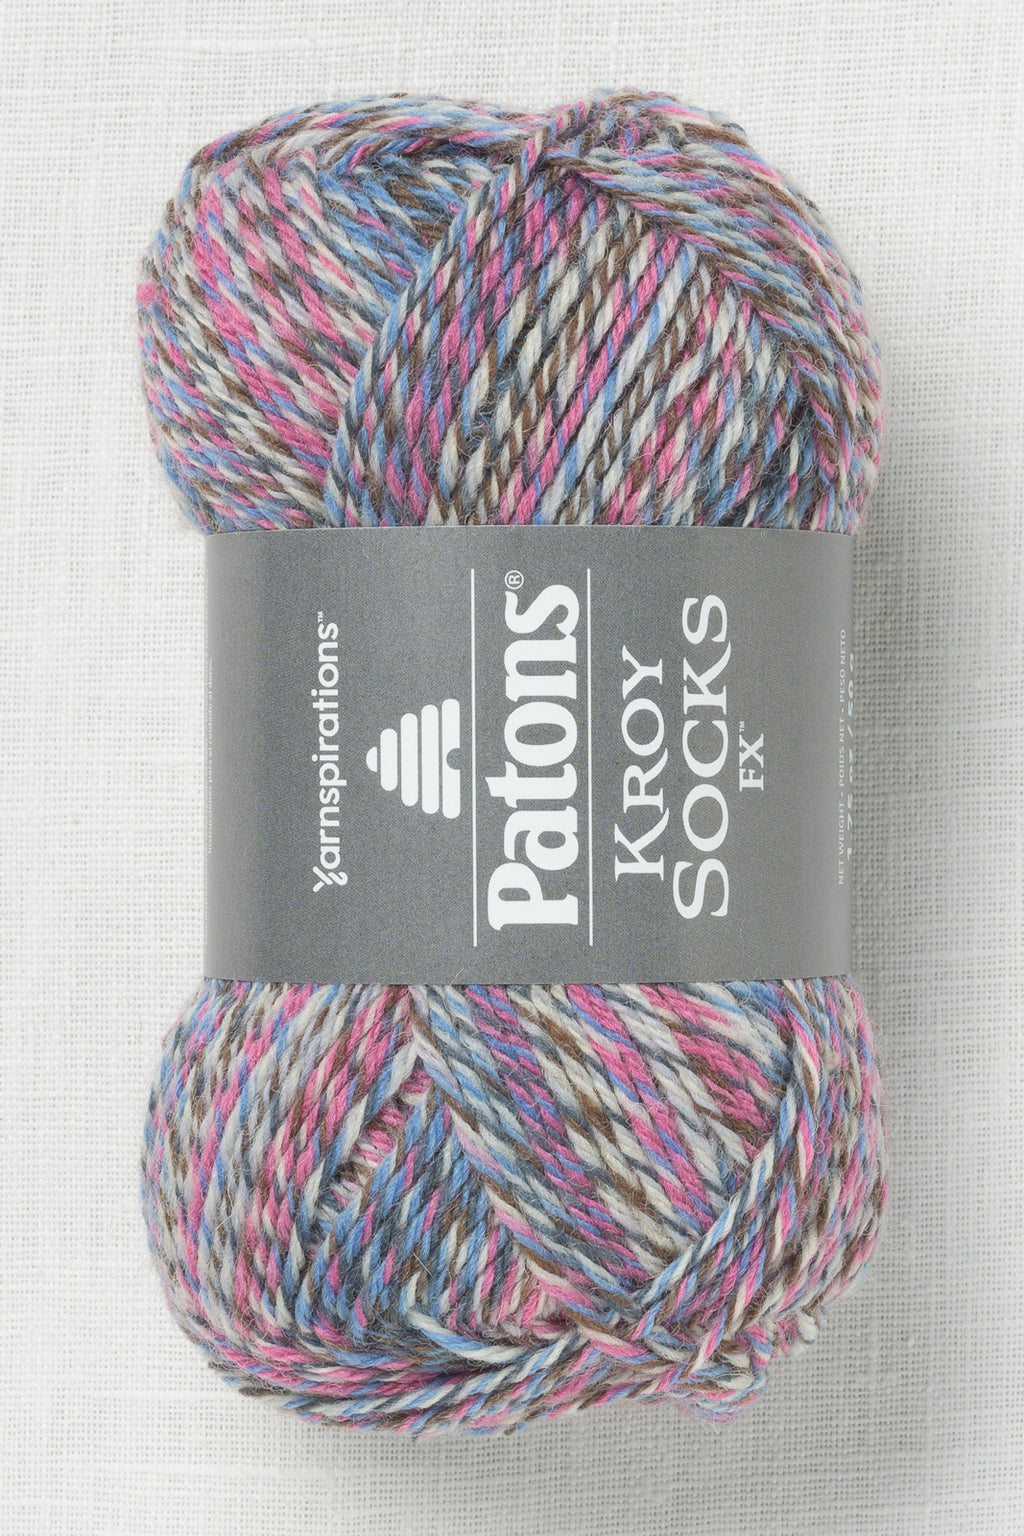 Patons Kroy Socks Cameo Colors